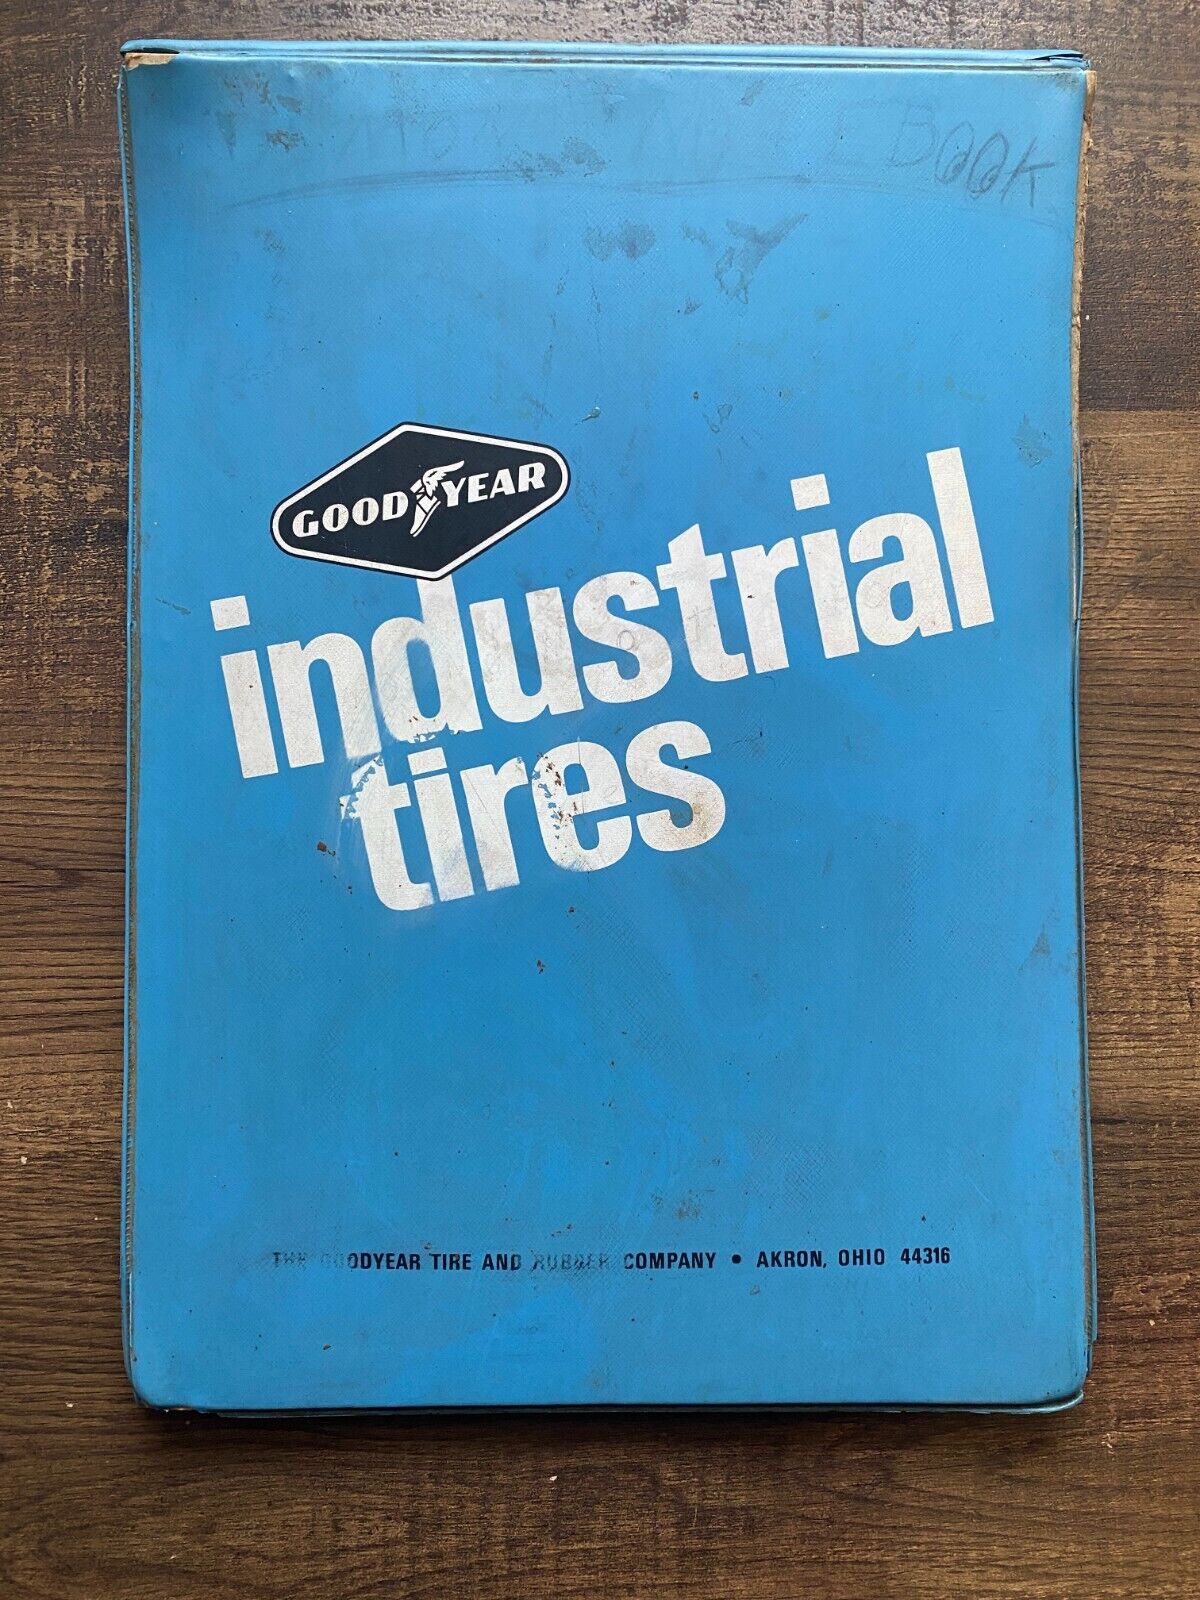 GoodYear  Industrial Tires Top Open 3 Ring Binder - Advertising